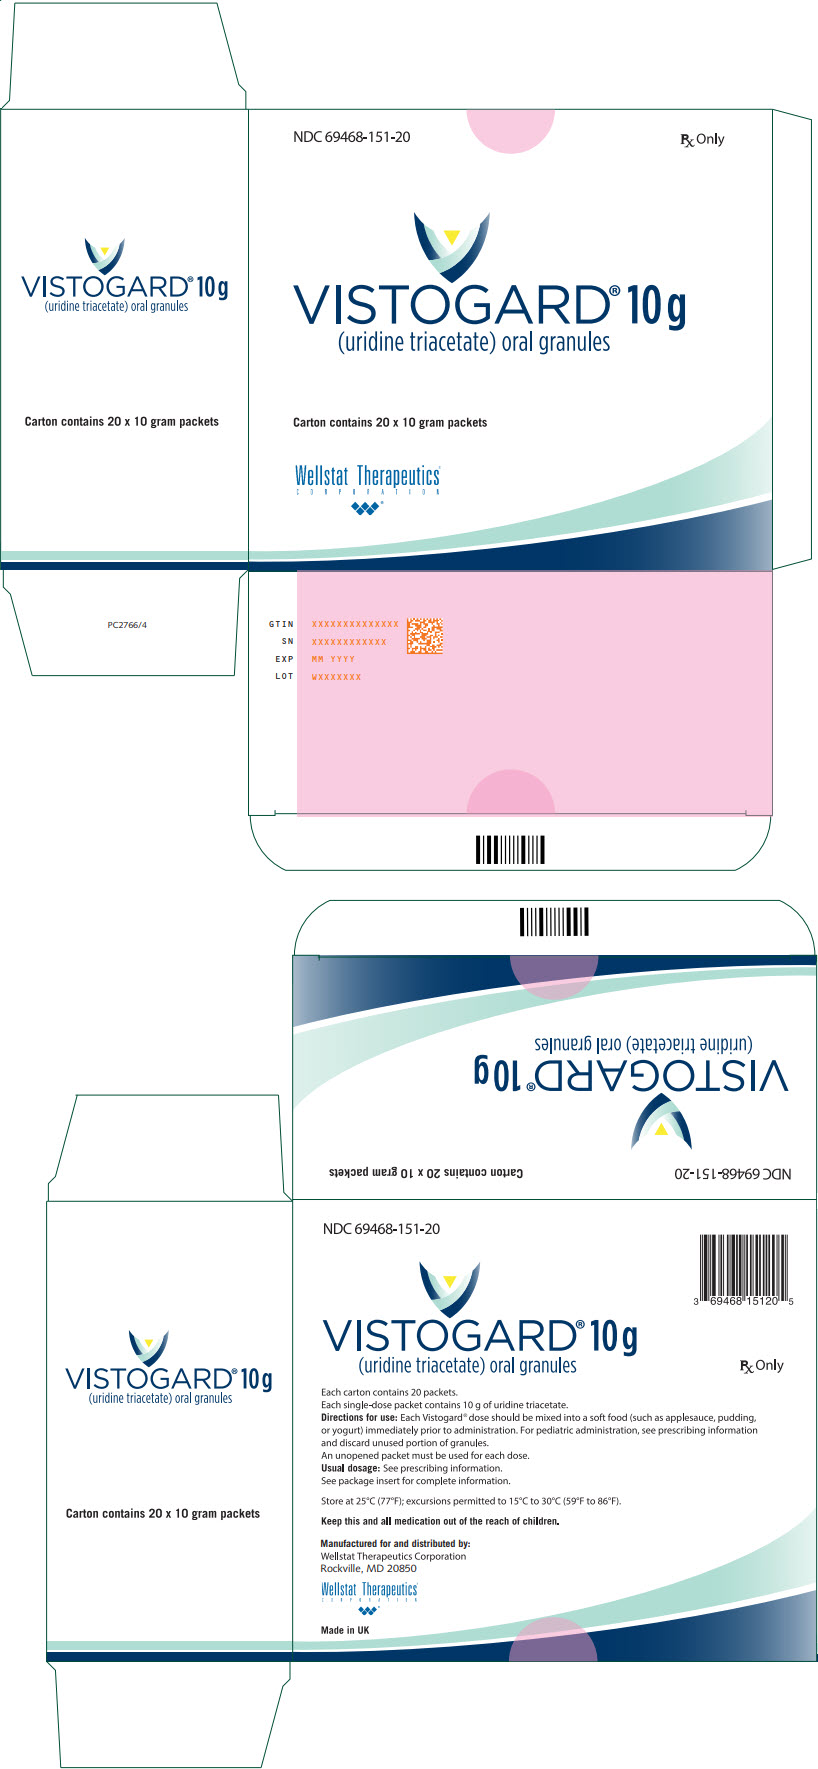 PRINCIPAL DISPLAY PANEL - 10 g Packet Carton